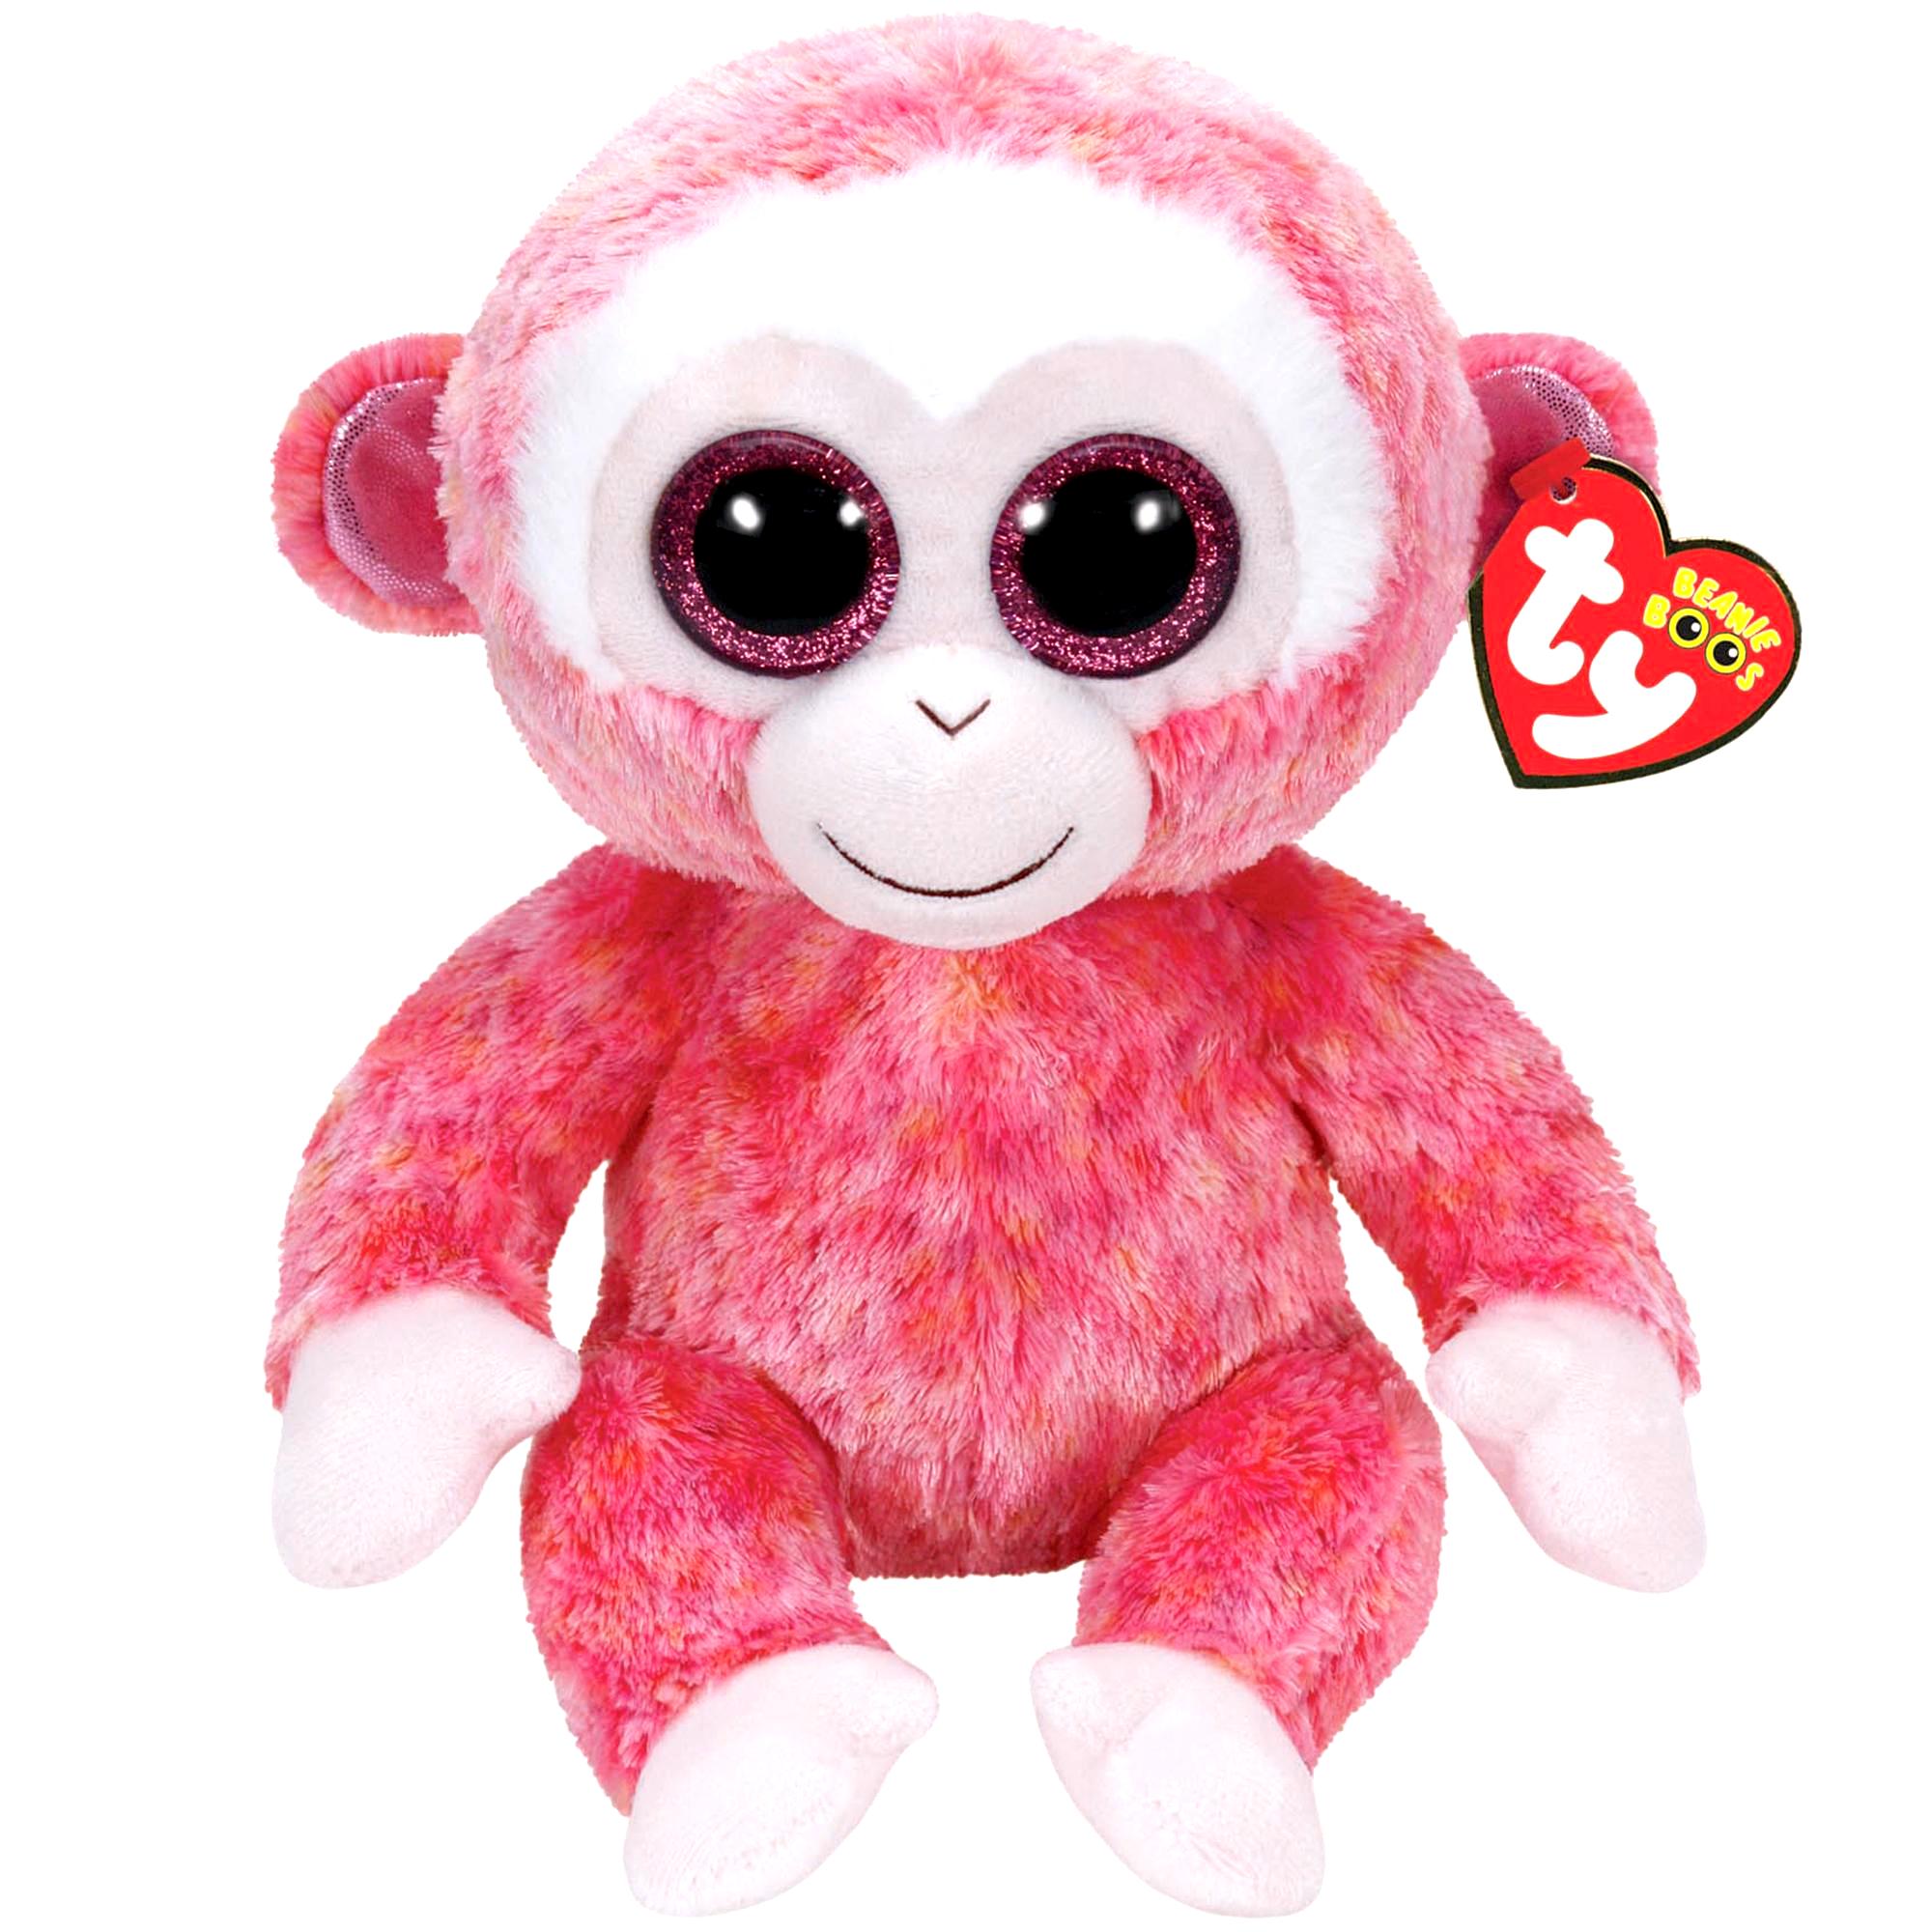 NEW MWMT 6 Inch Ty Beanie Boos ~ RUBY the Pink Monkey 